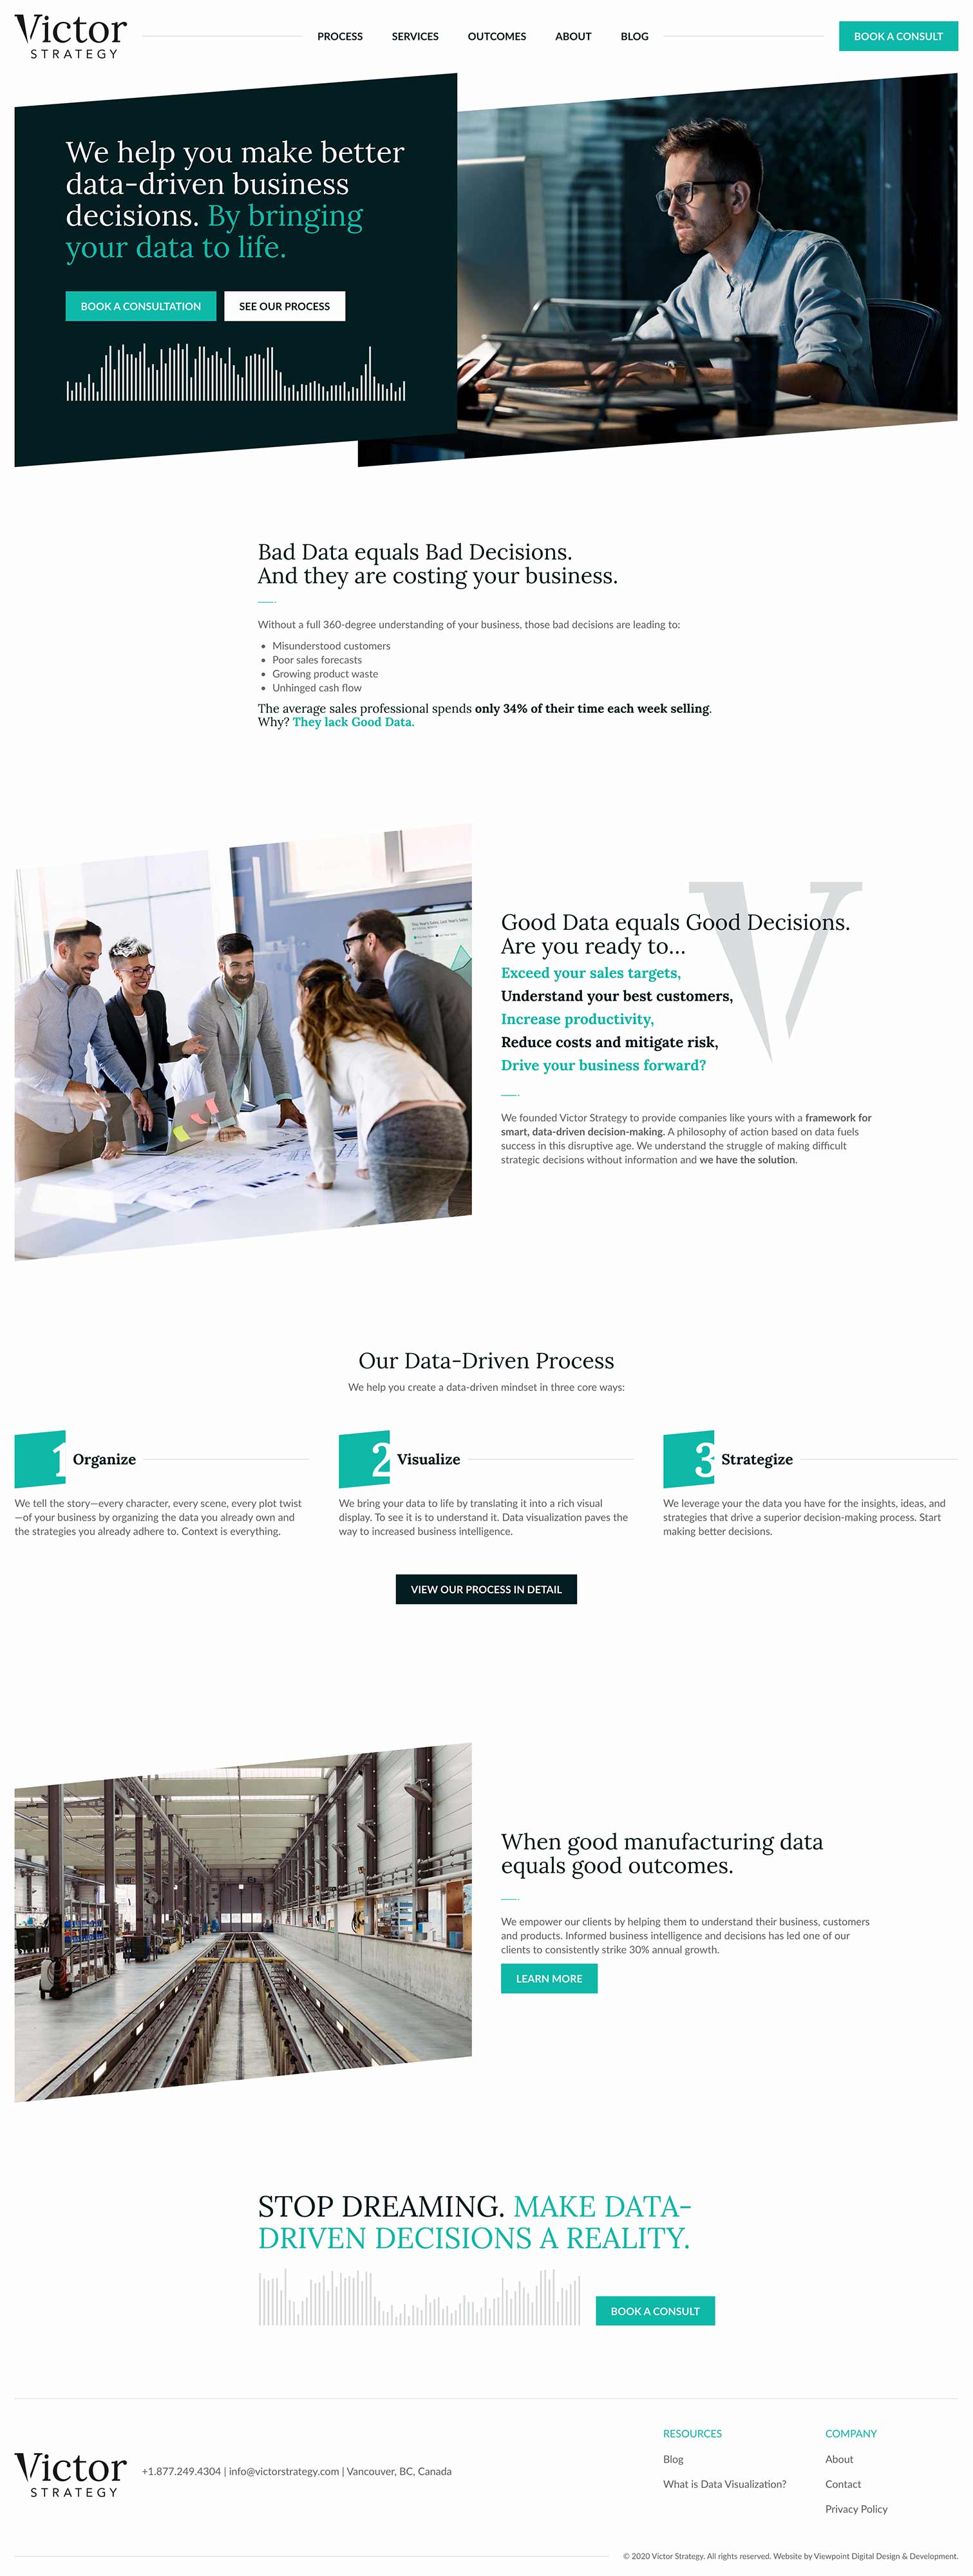 Victor Strategy Website Design